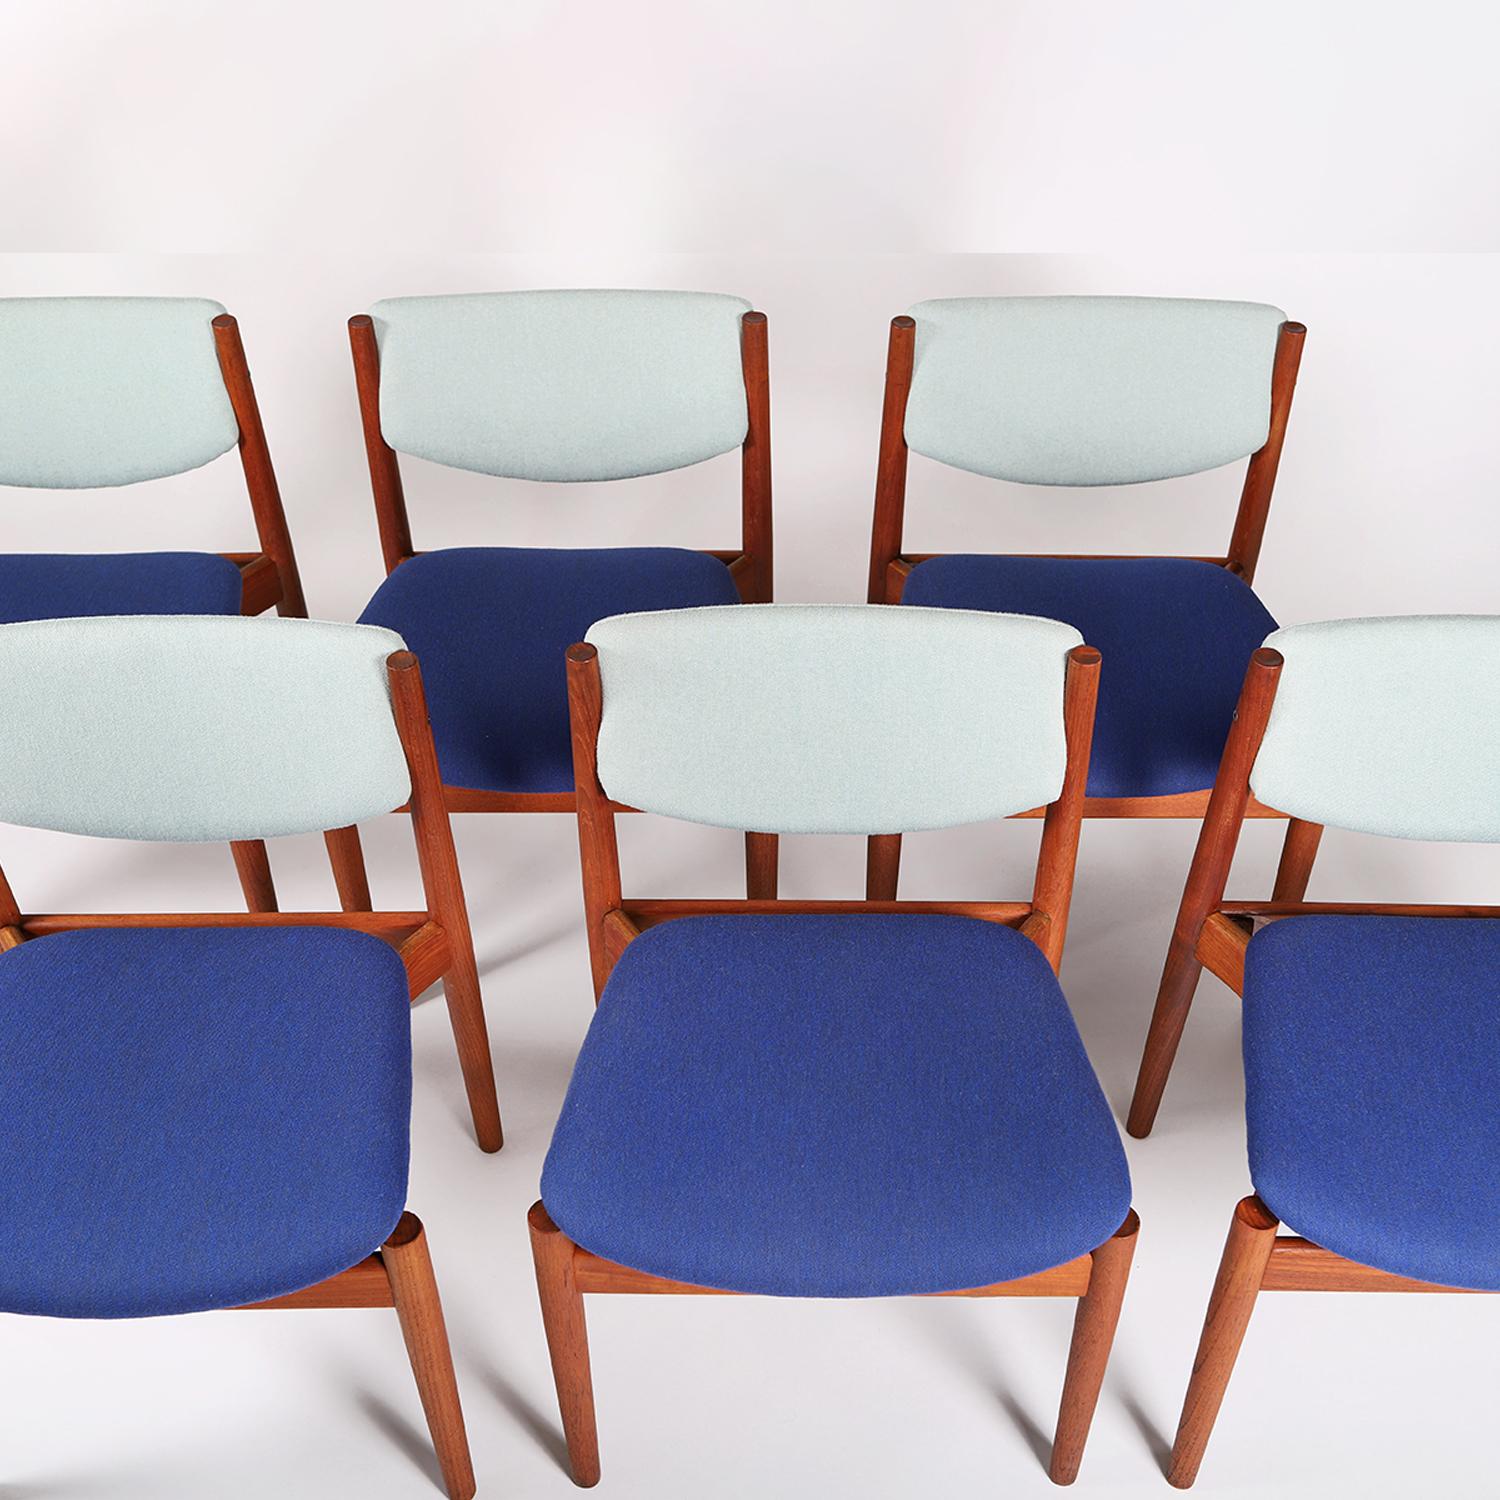 20th Century Scandinavian Modern Teak Dining Chairs by Finn Juhl